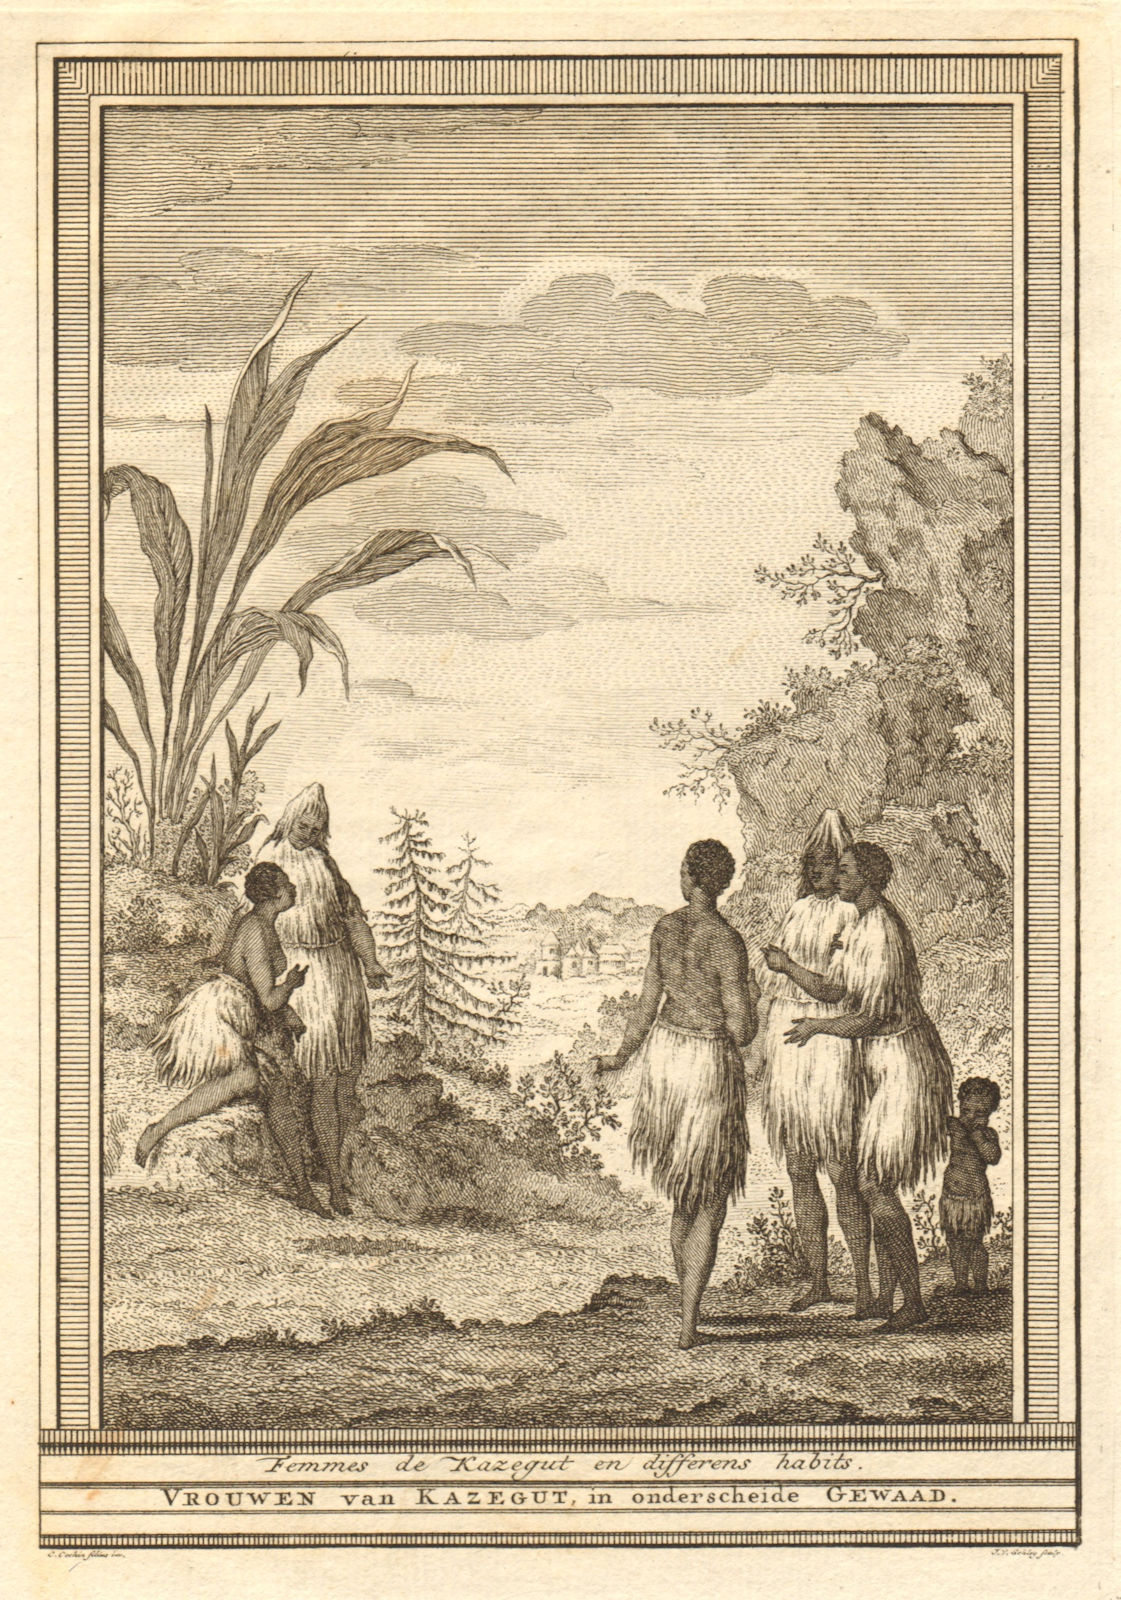 Associate Product Guinea-Bissau. Kazegut women. Galinhas island, Bissagos archipelago. SCHLEY 1747